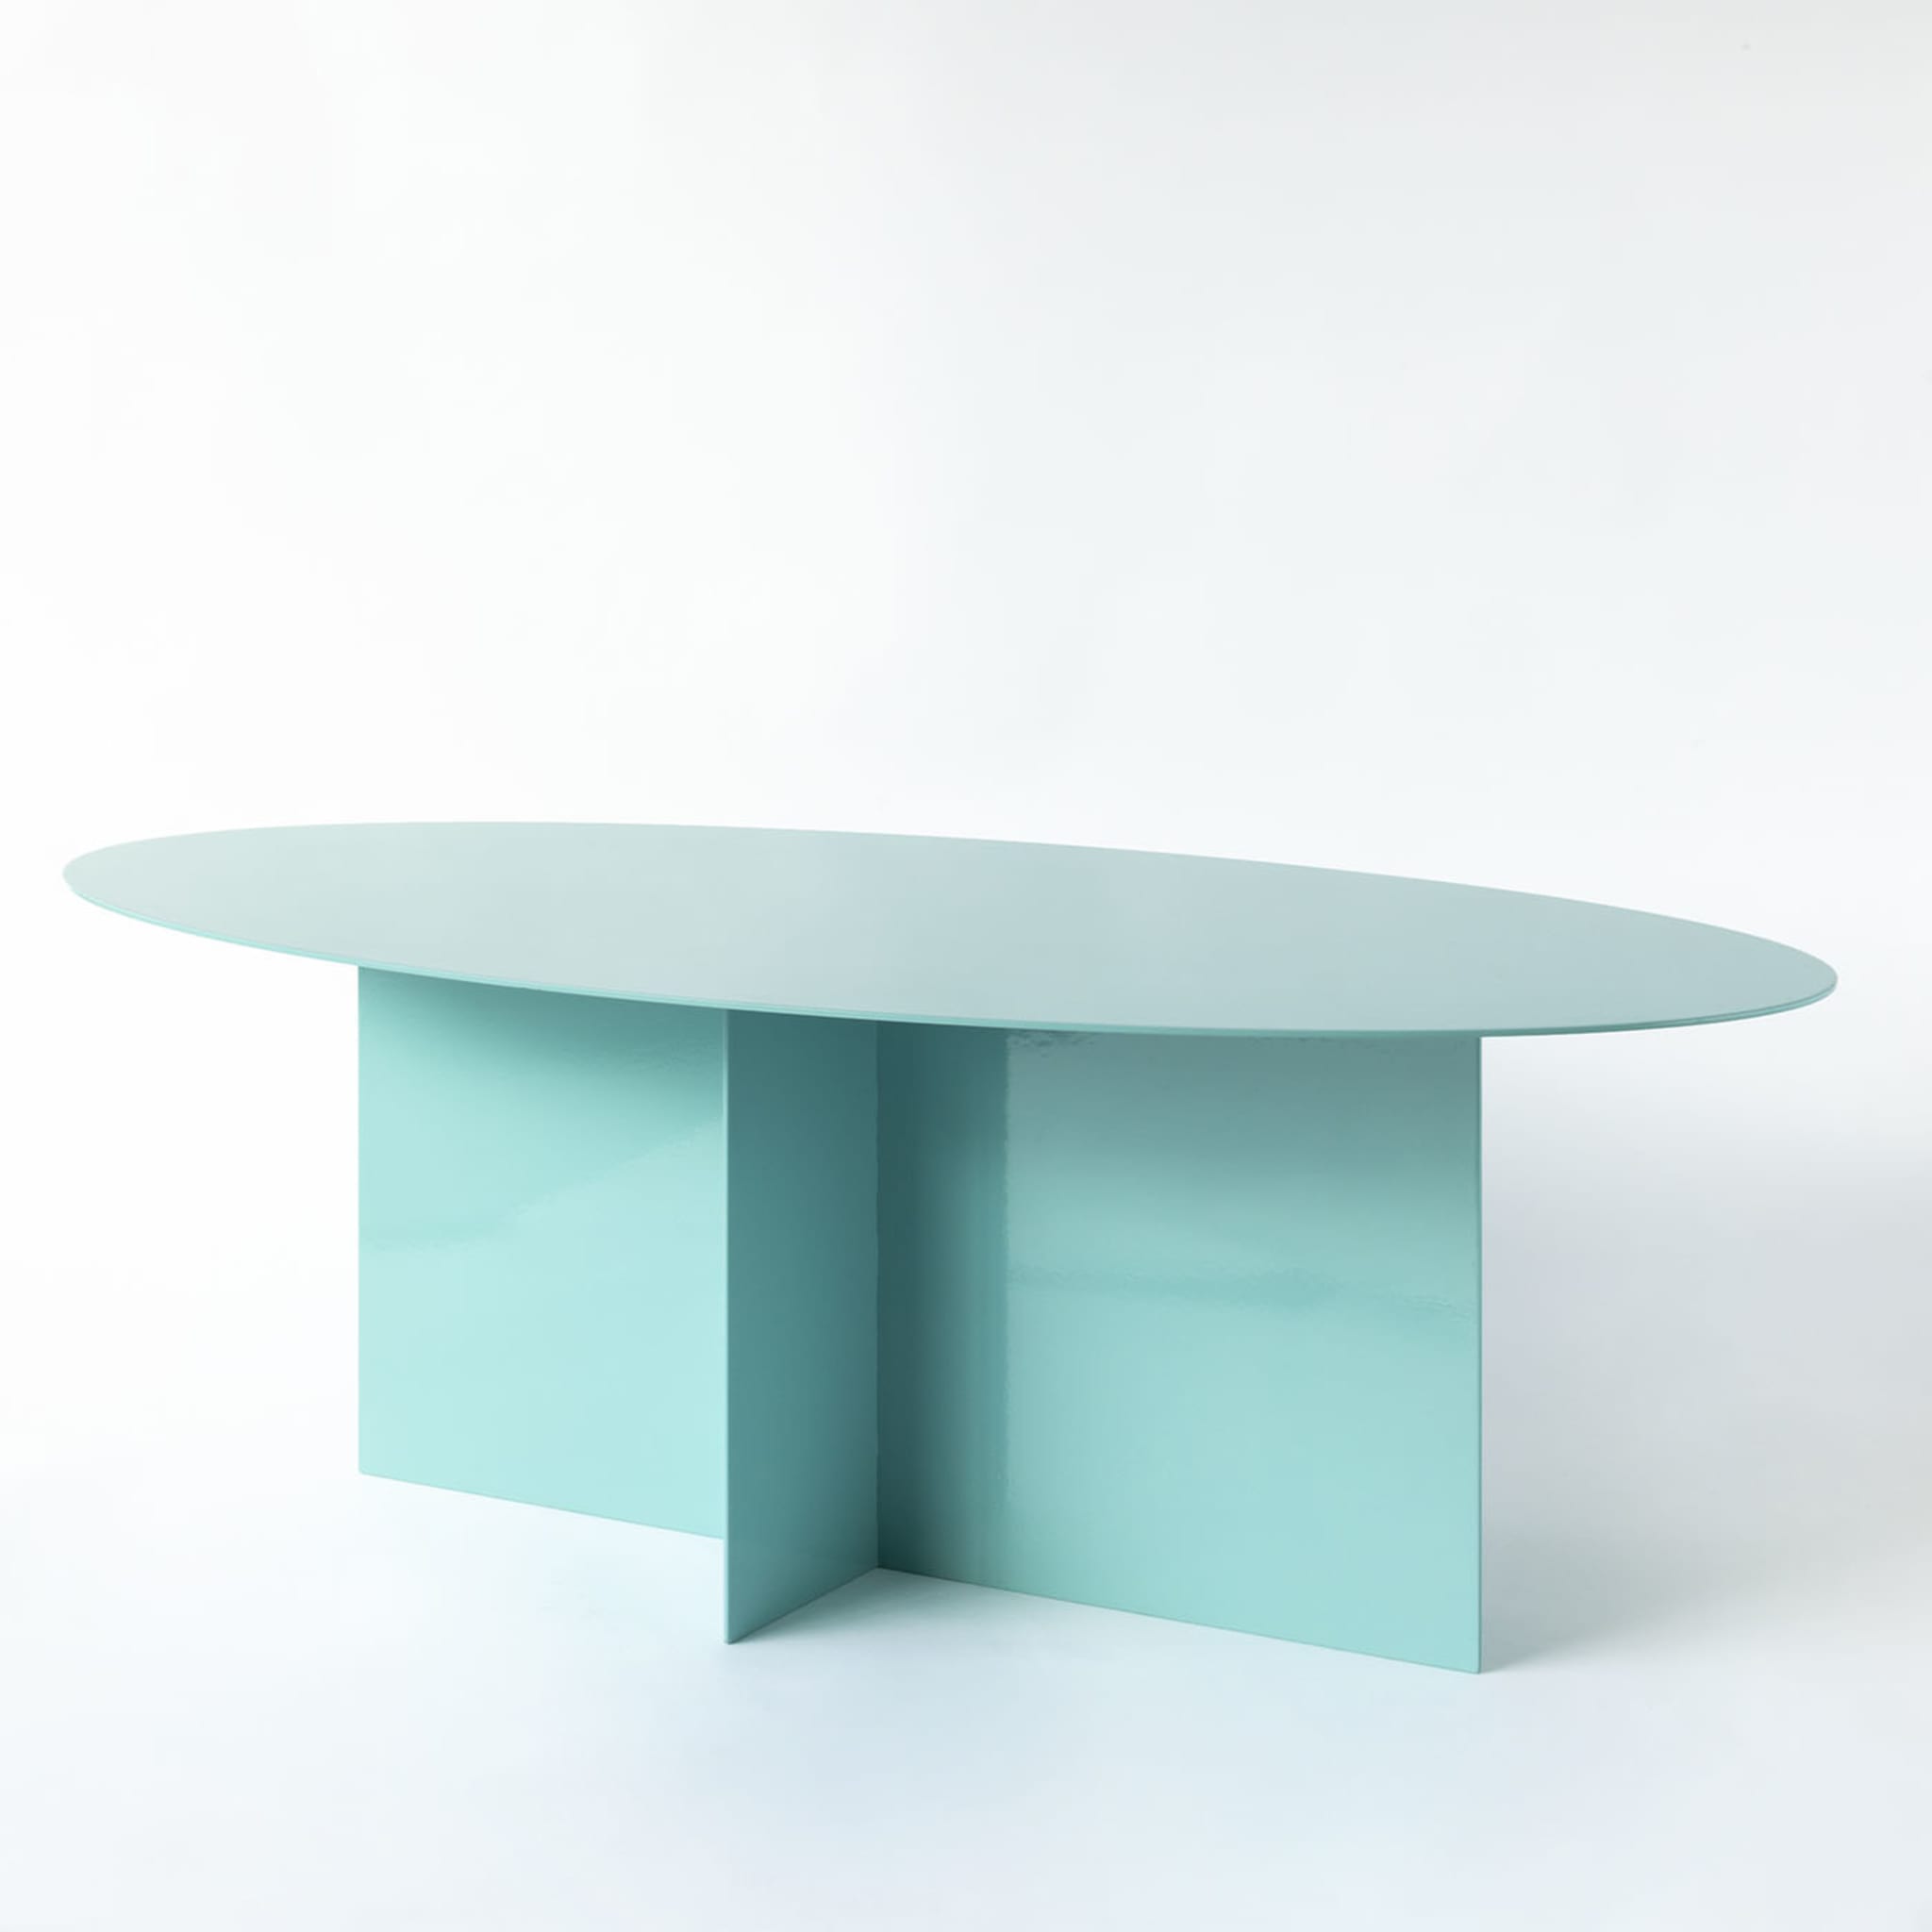 Across Oval Coffe Table Elliptical by Claudia Pignatale - Vue alternative 3